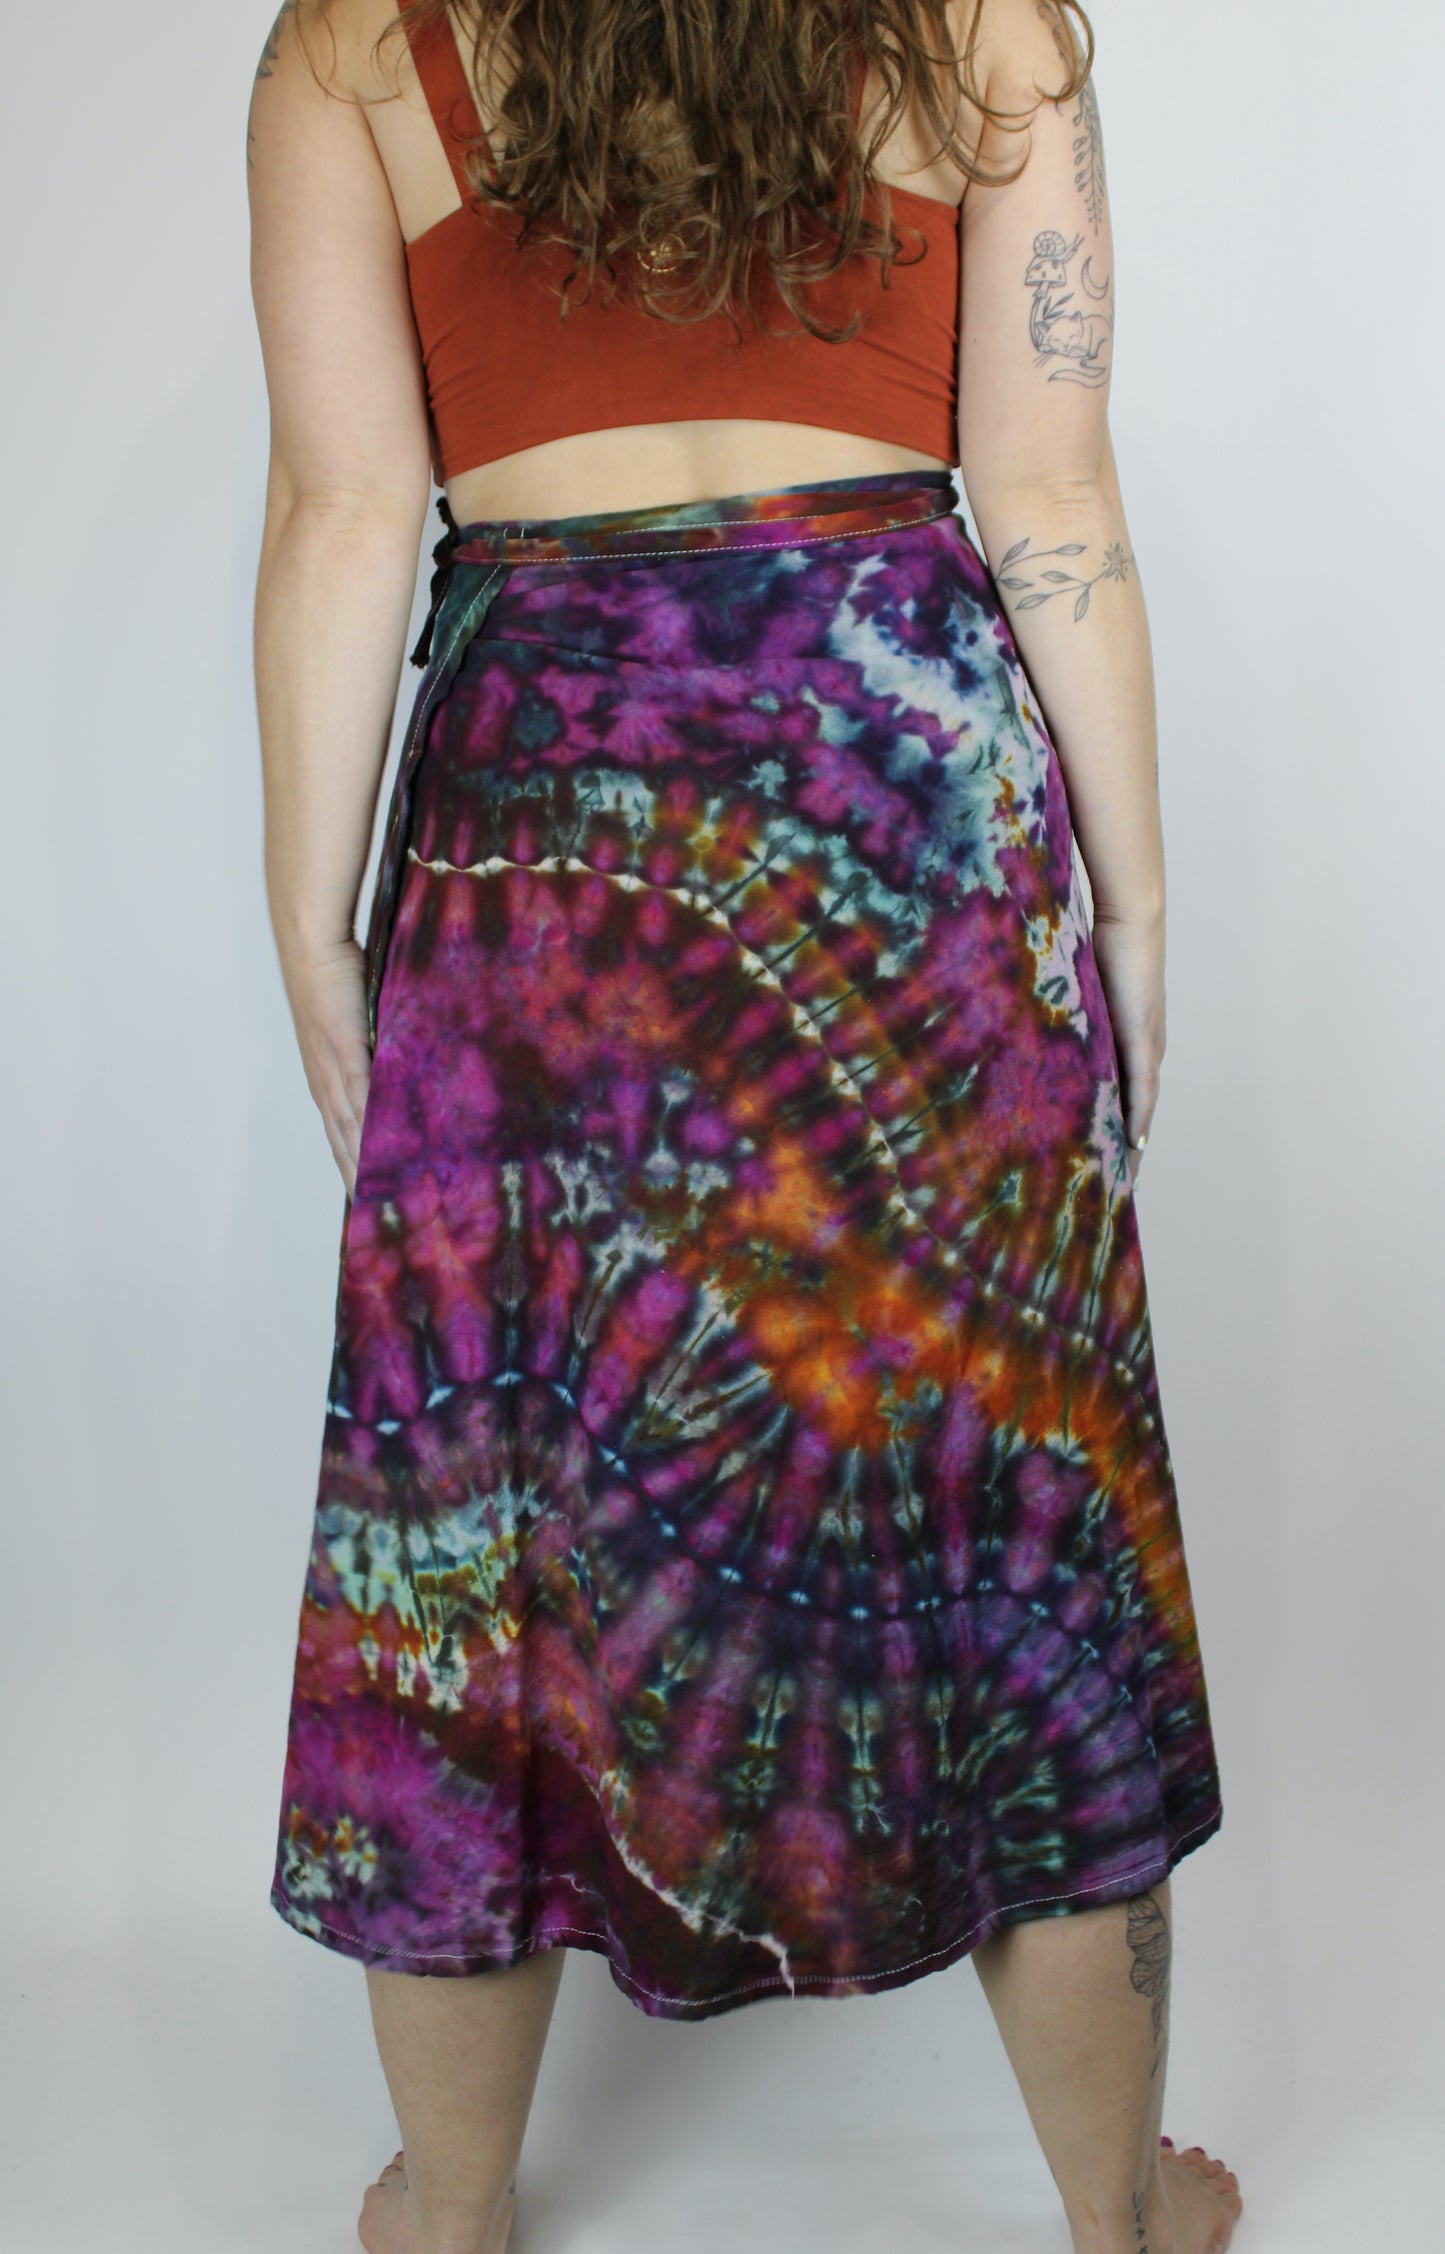 M/L - "Tropic Hypnosis" Wrap Skirt